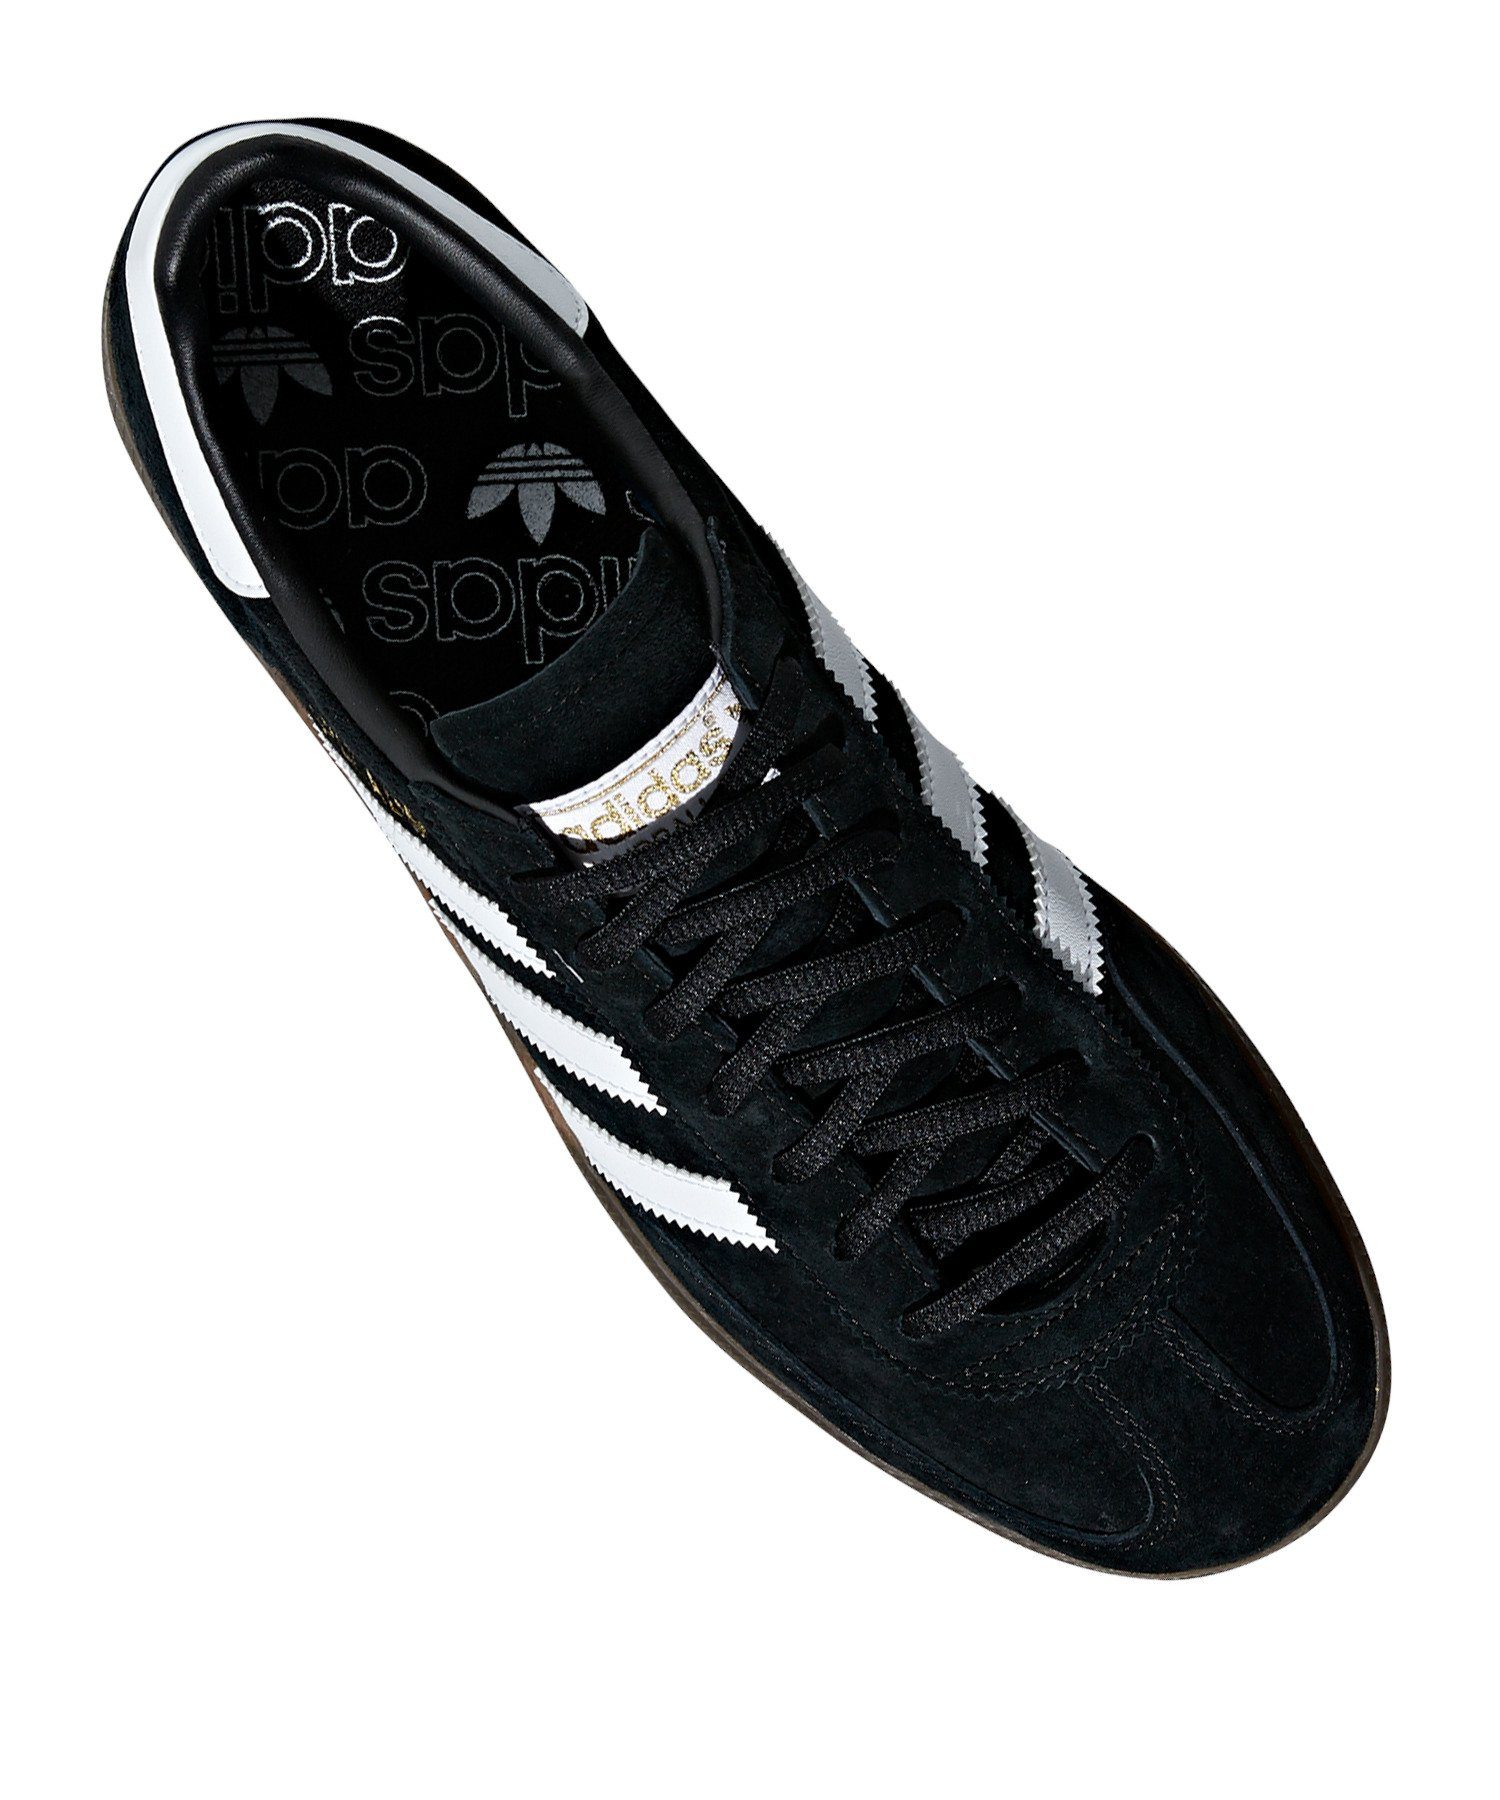 Spezial Sneaker Handball adidas Originals schwarz